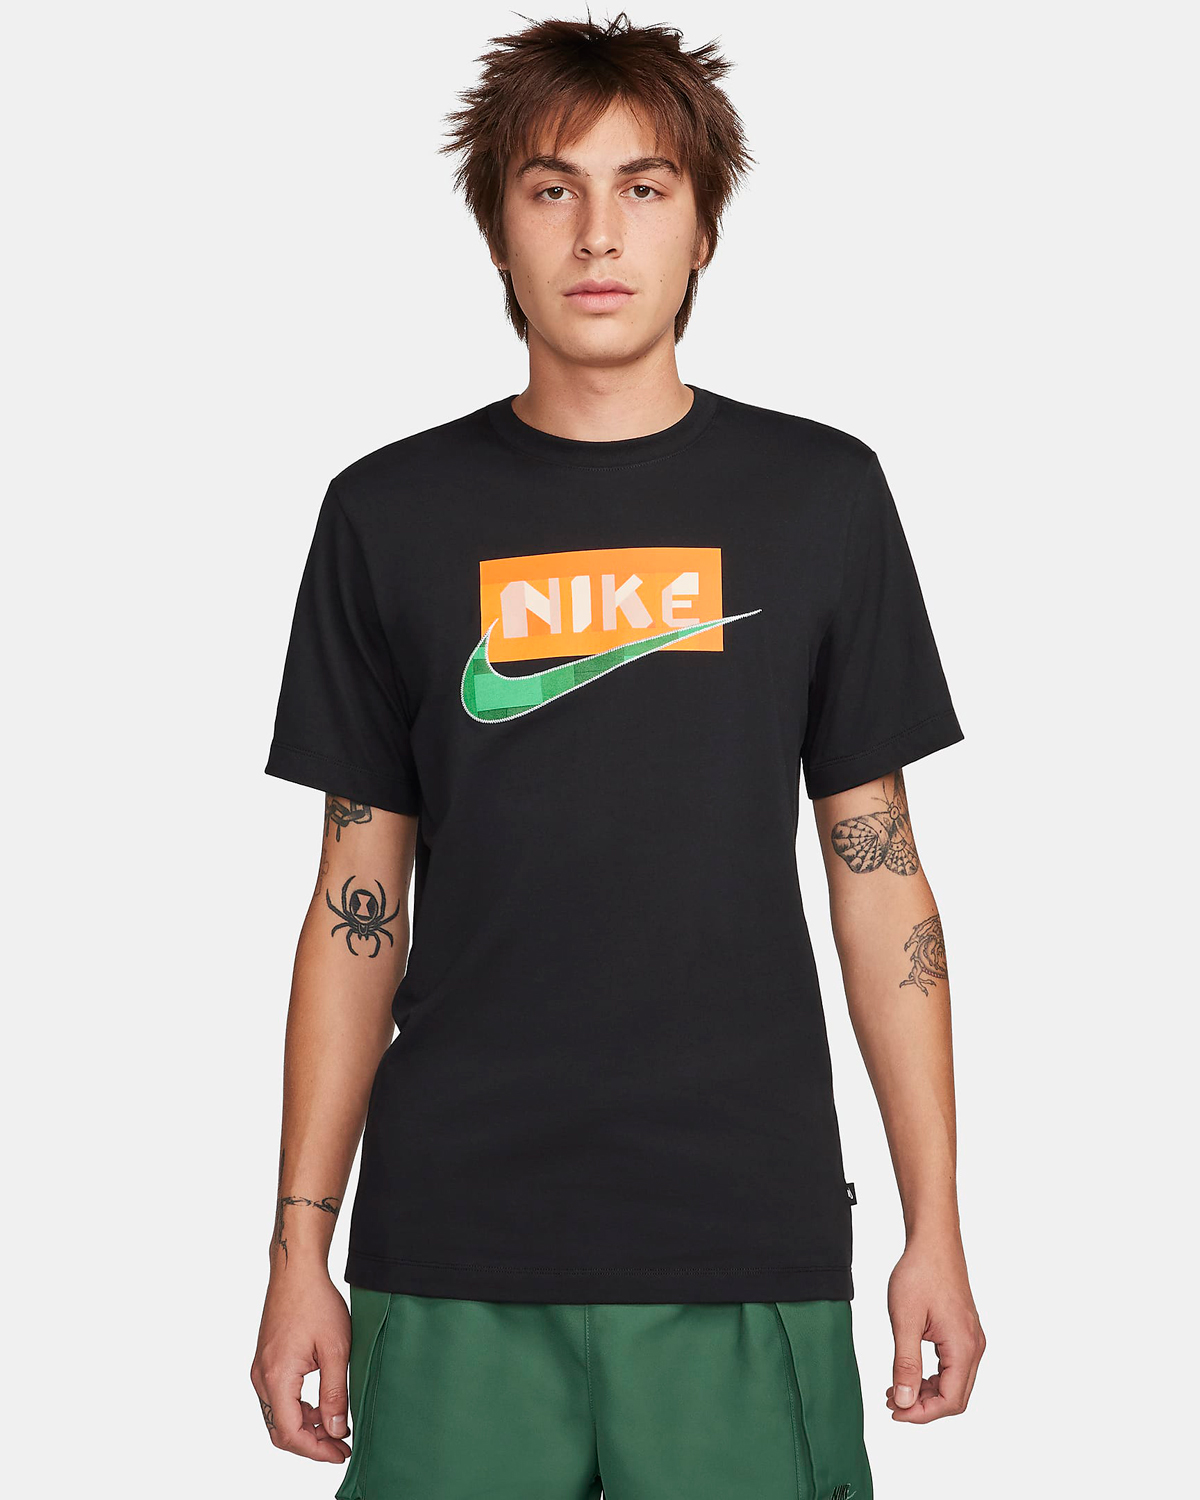 Nike Sportswear T Shirt Black Orange Green 1